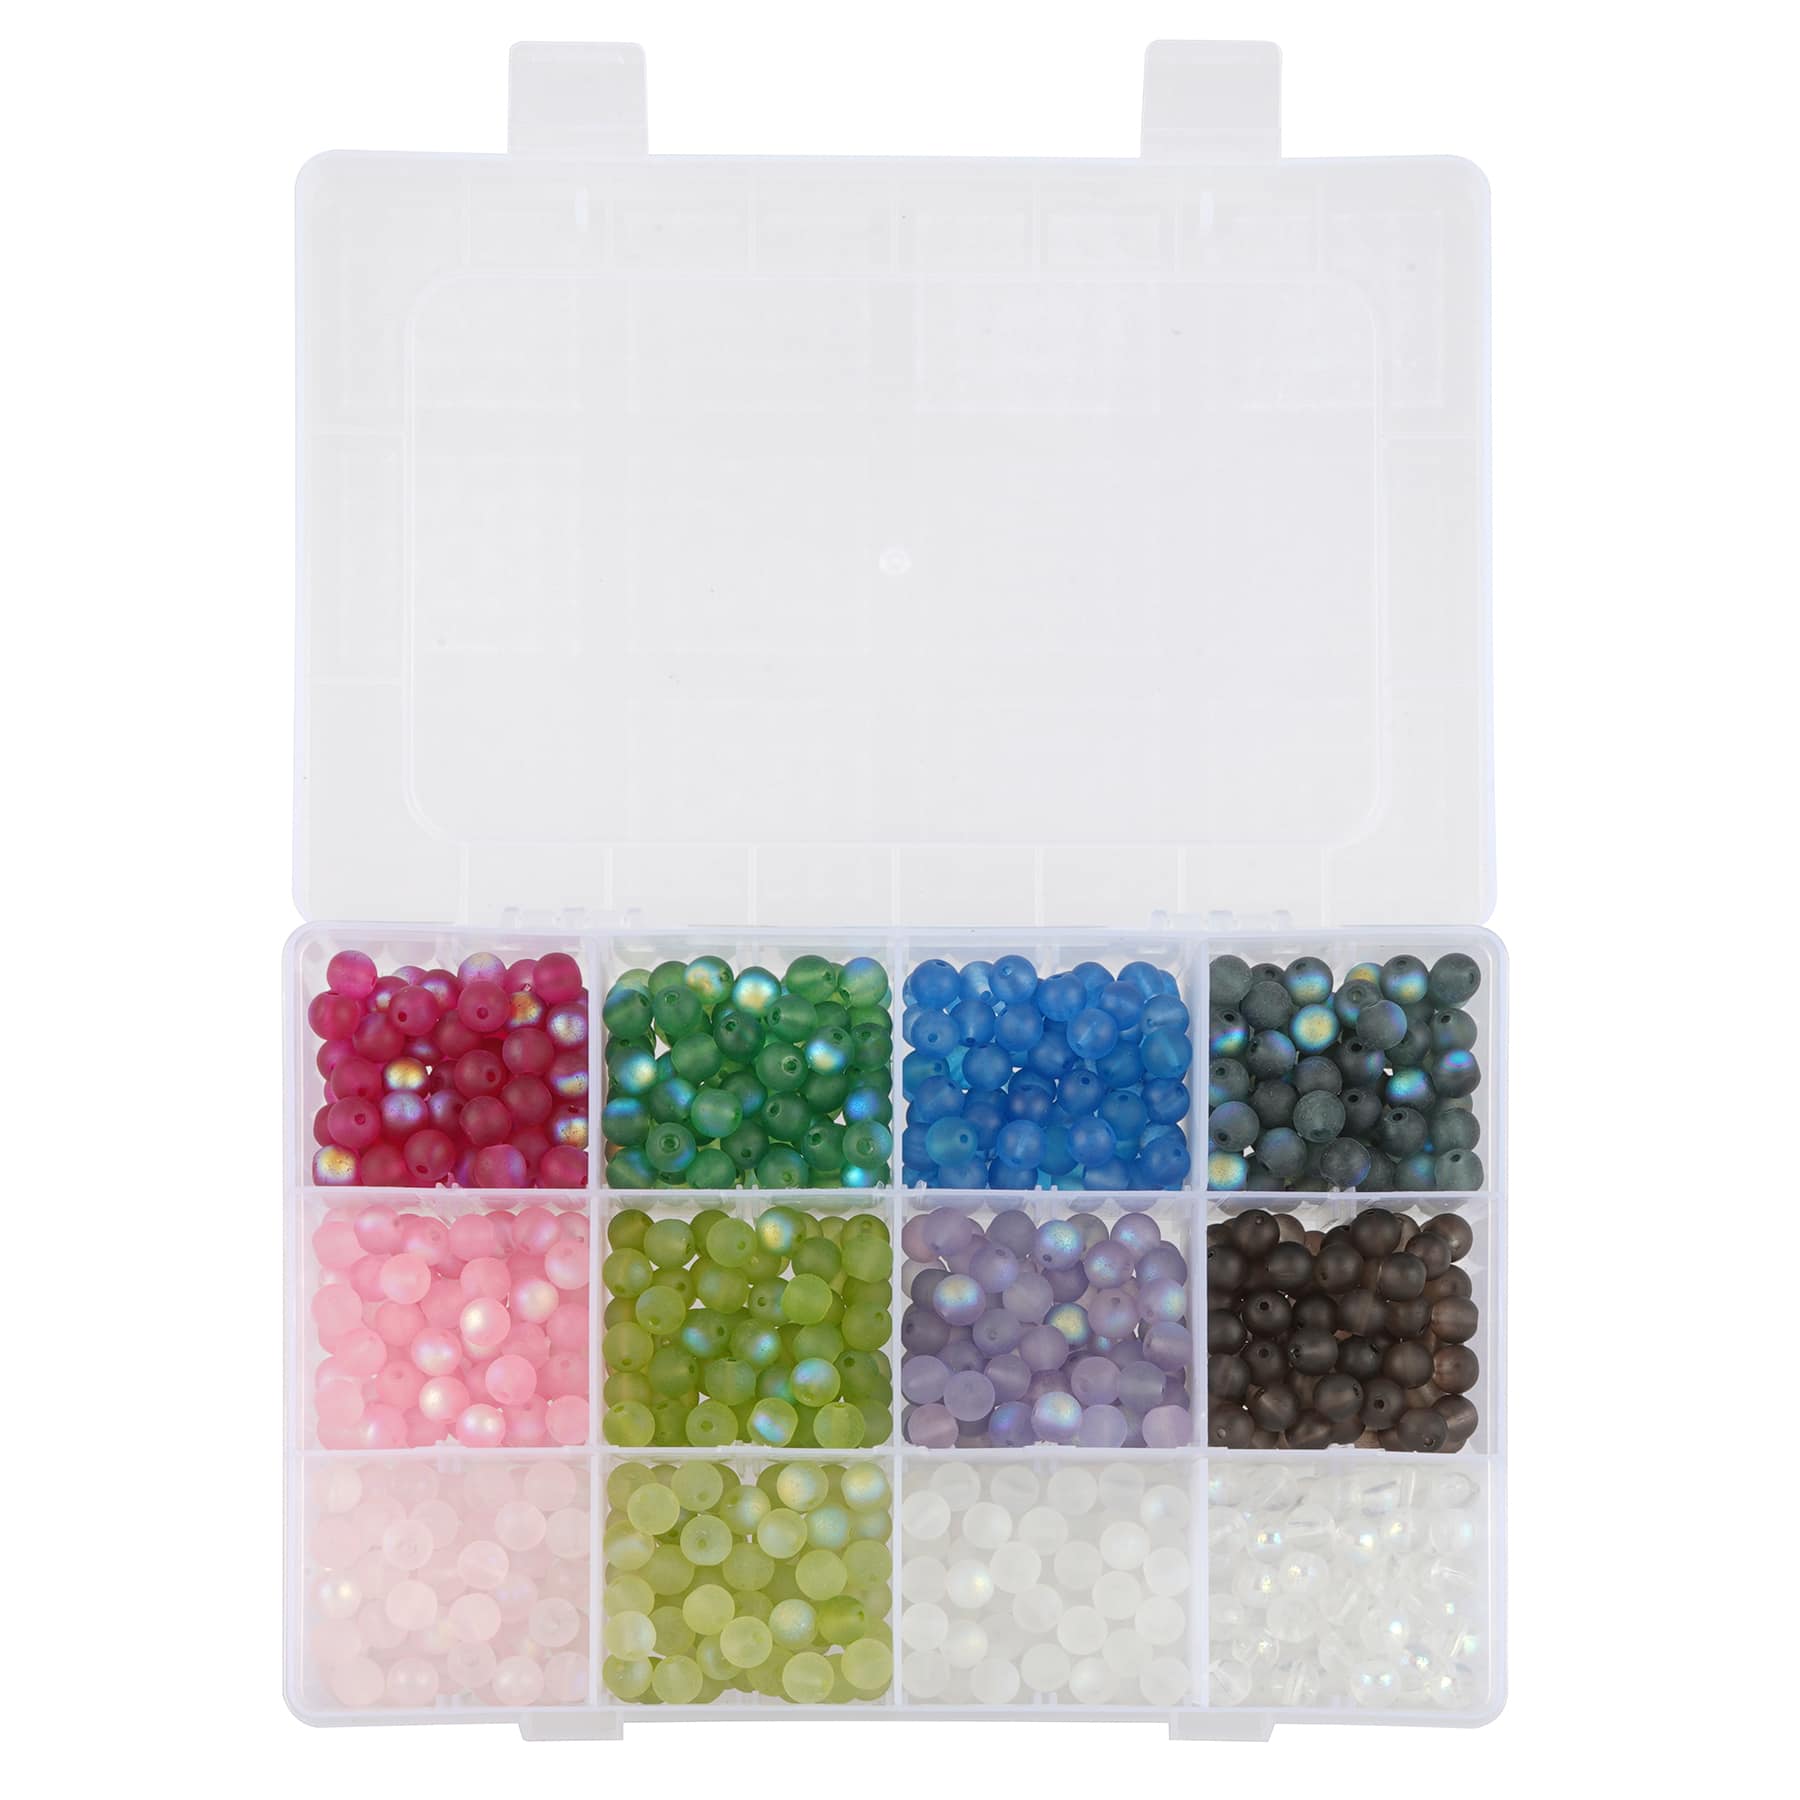 6 Packs: 960 ct. (5,760 total) Aurora Borealis Glass Bead Mix, 8mm by Bead Landing&#x2122;